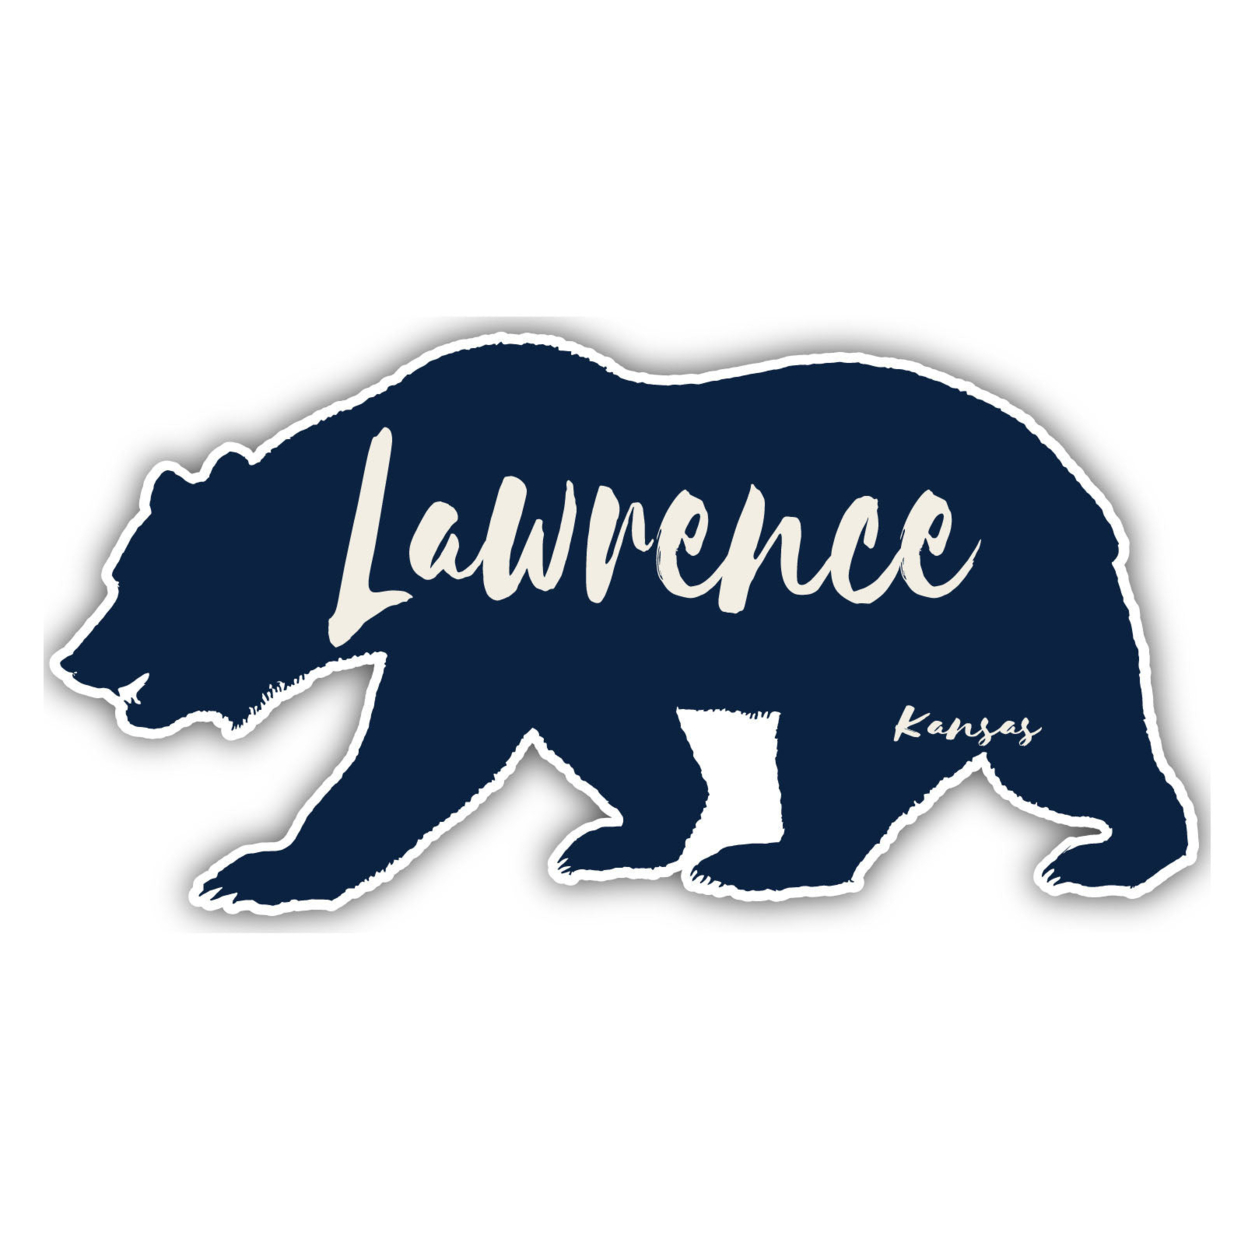 Lawrence Kansas Souvenir Decorative Stickers (Choose Theme And Size) - 2-Inch, Tent